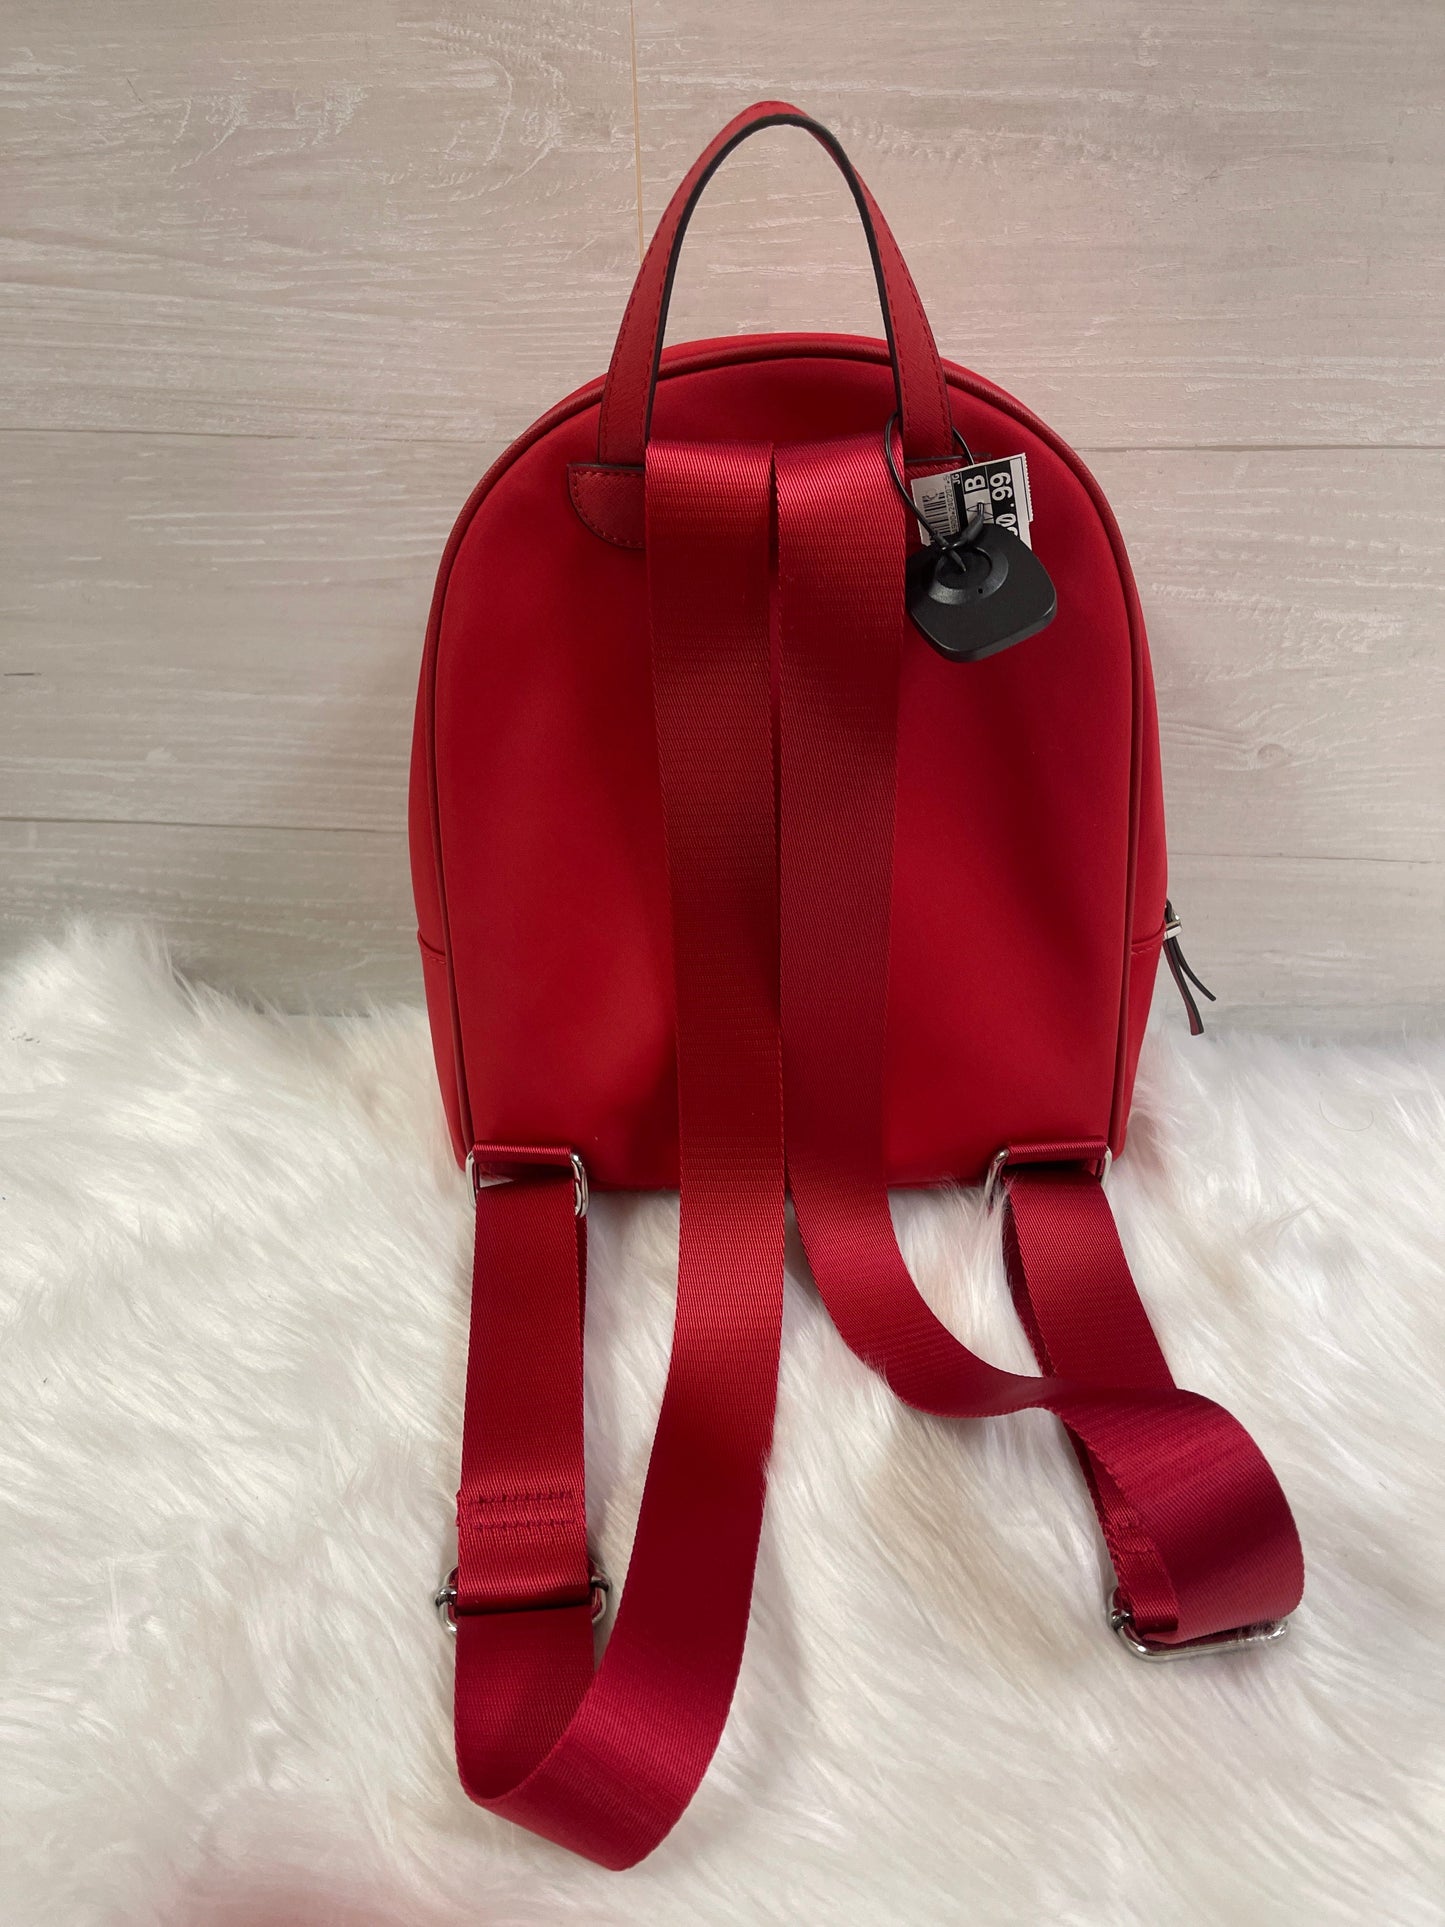 Backpack Designer By Karl Lagerfeld  Size: Medium